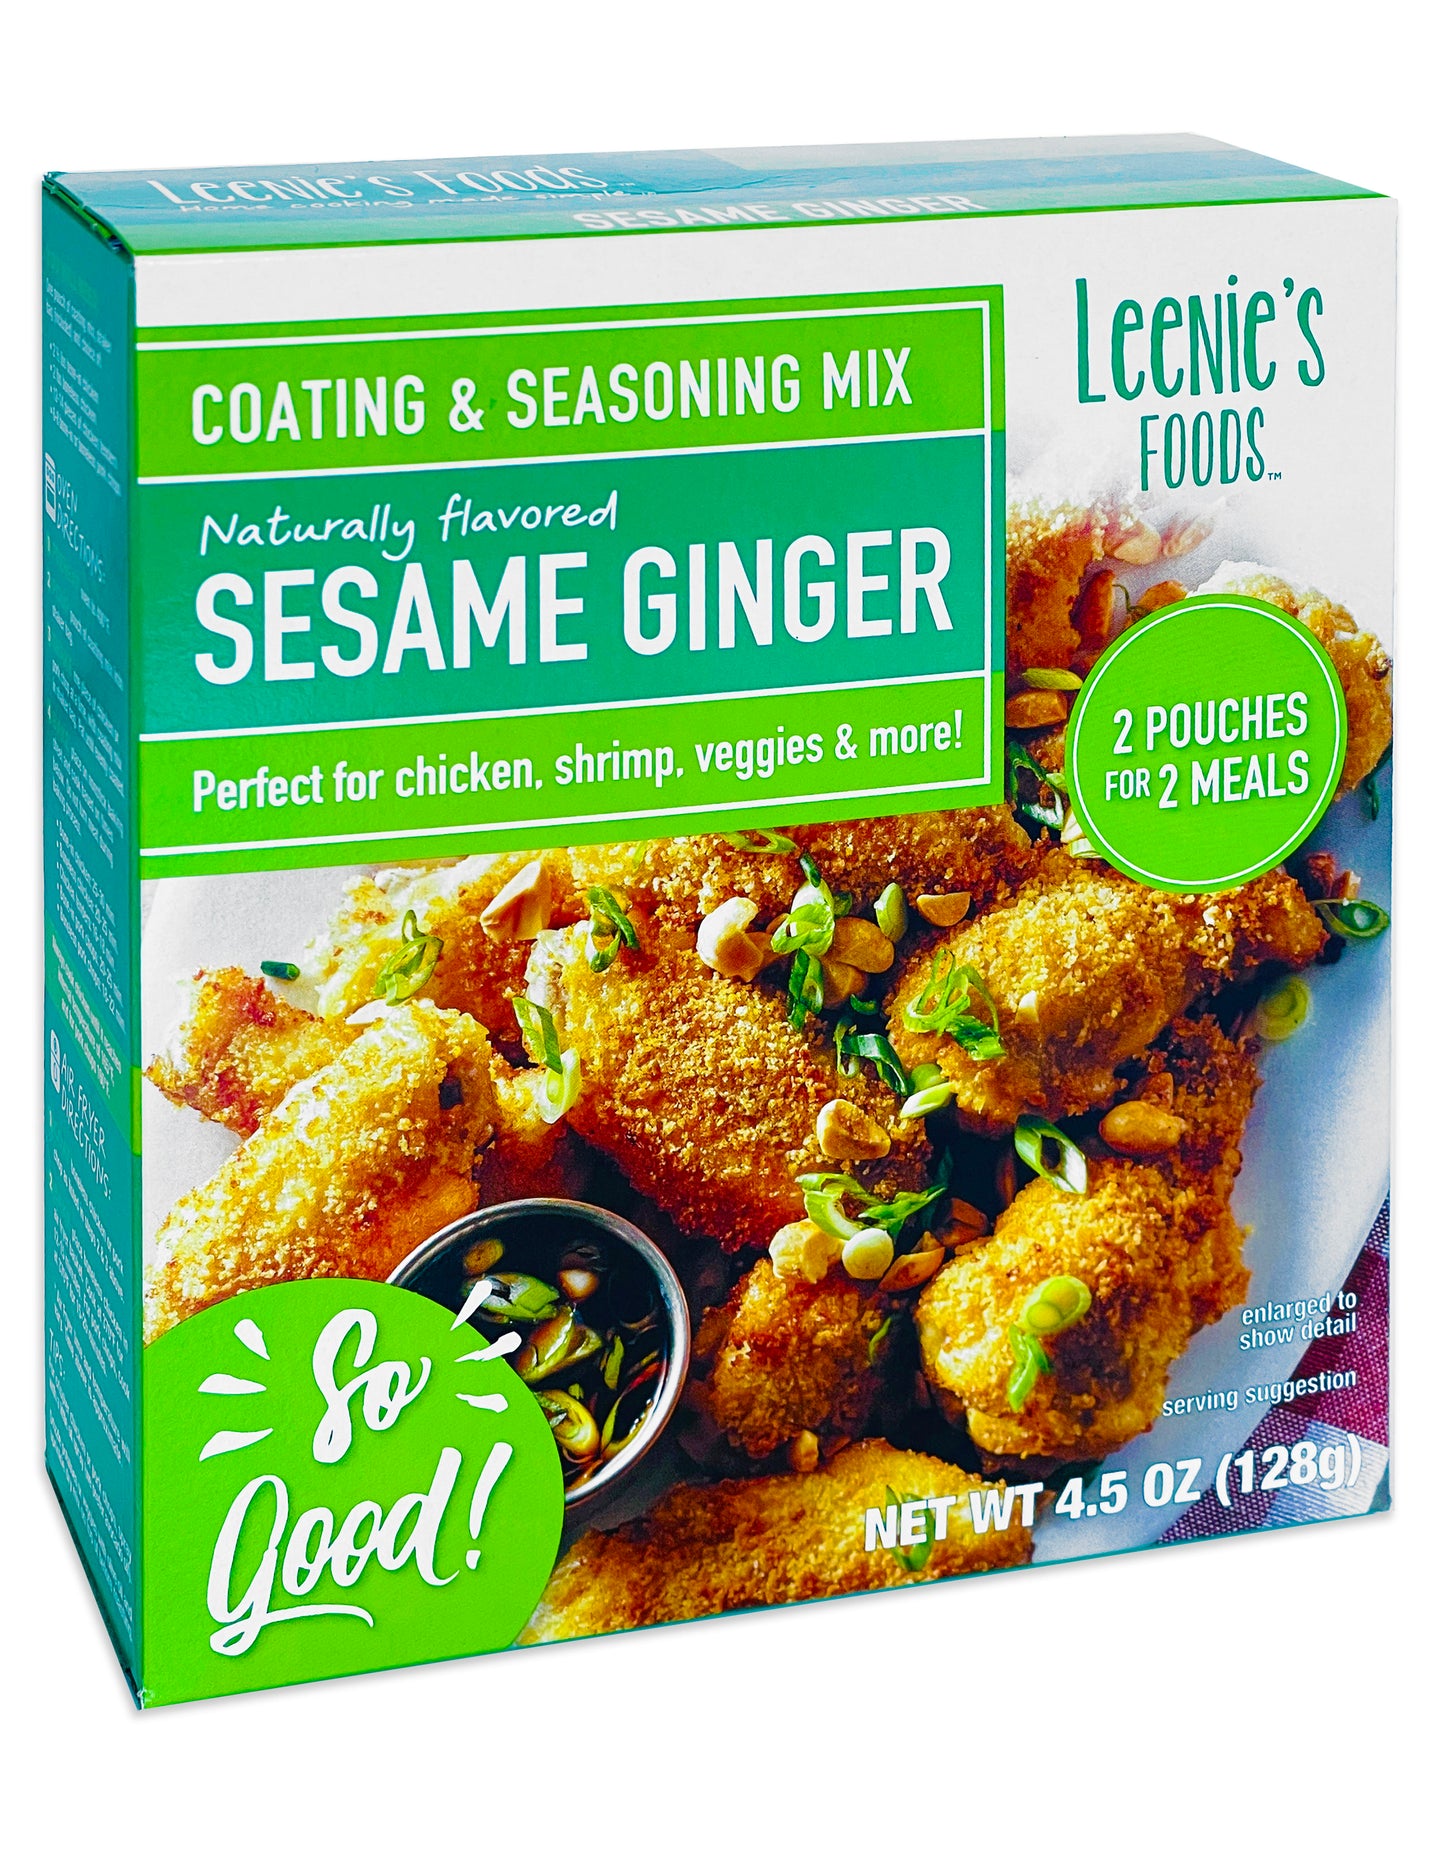 Sesame Ginger Coating & Seasoning